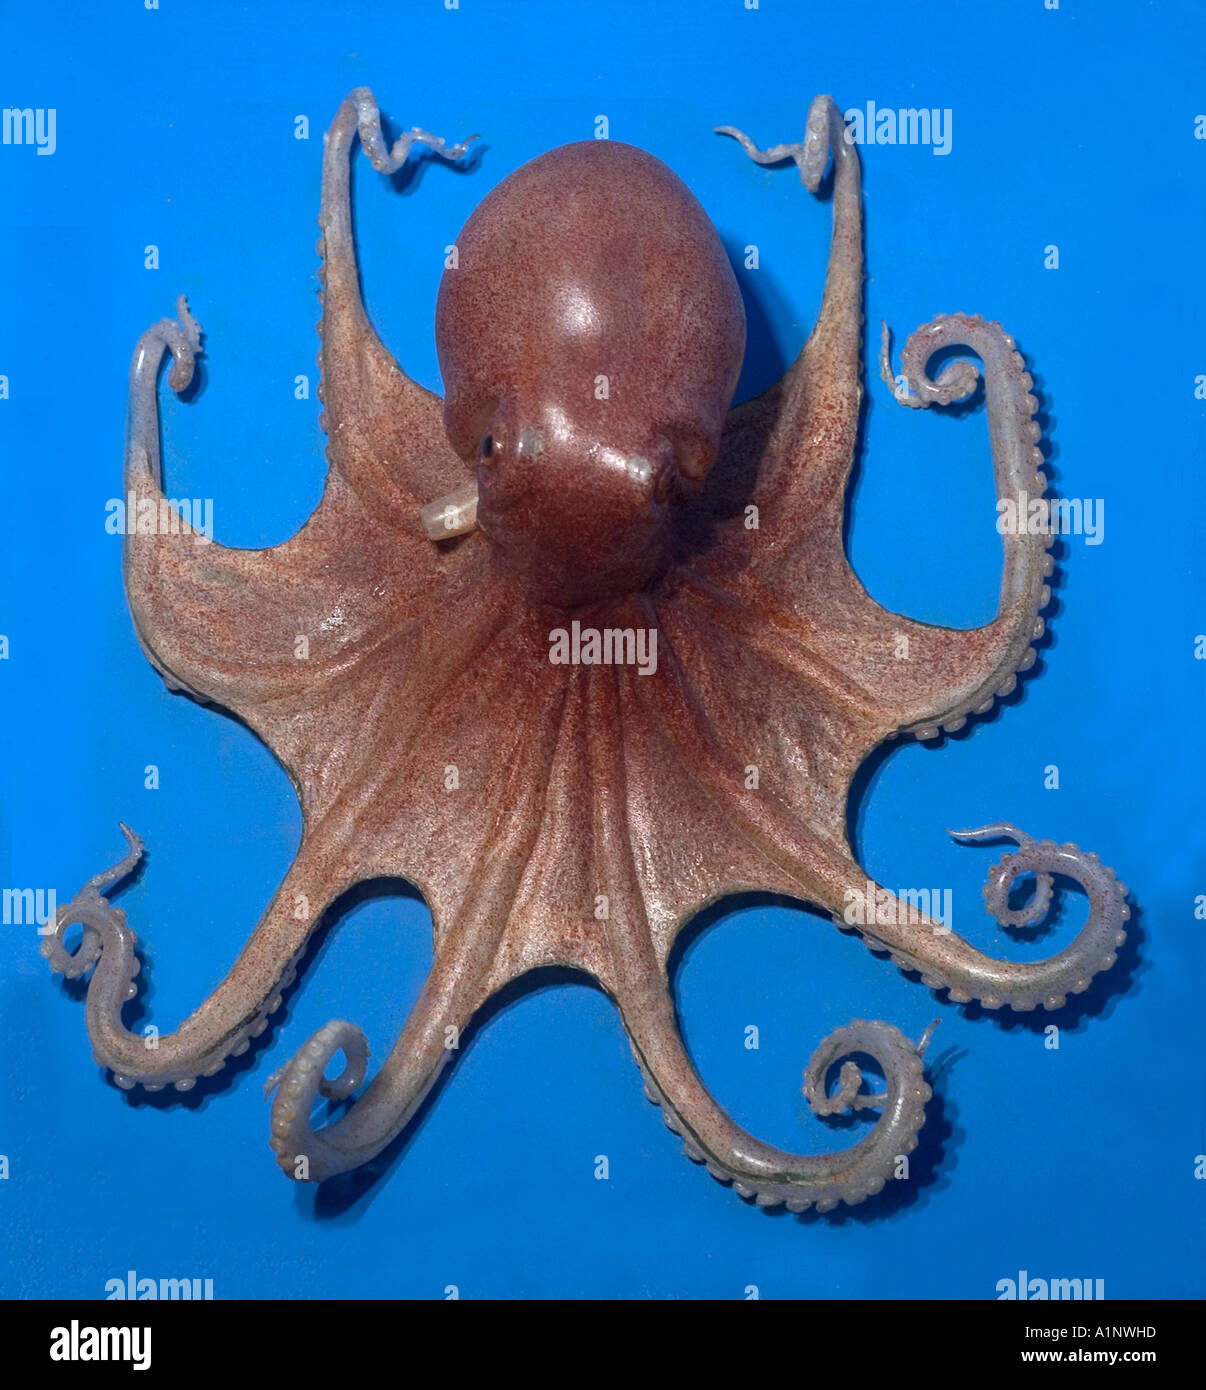 Musky octopus Stock Photo